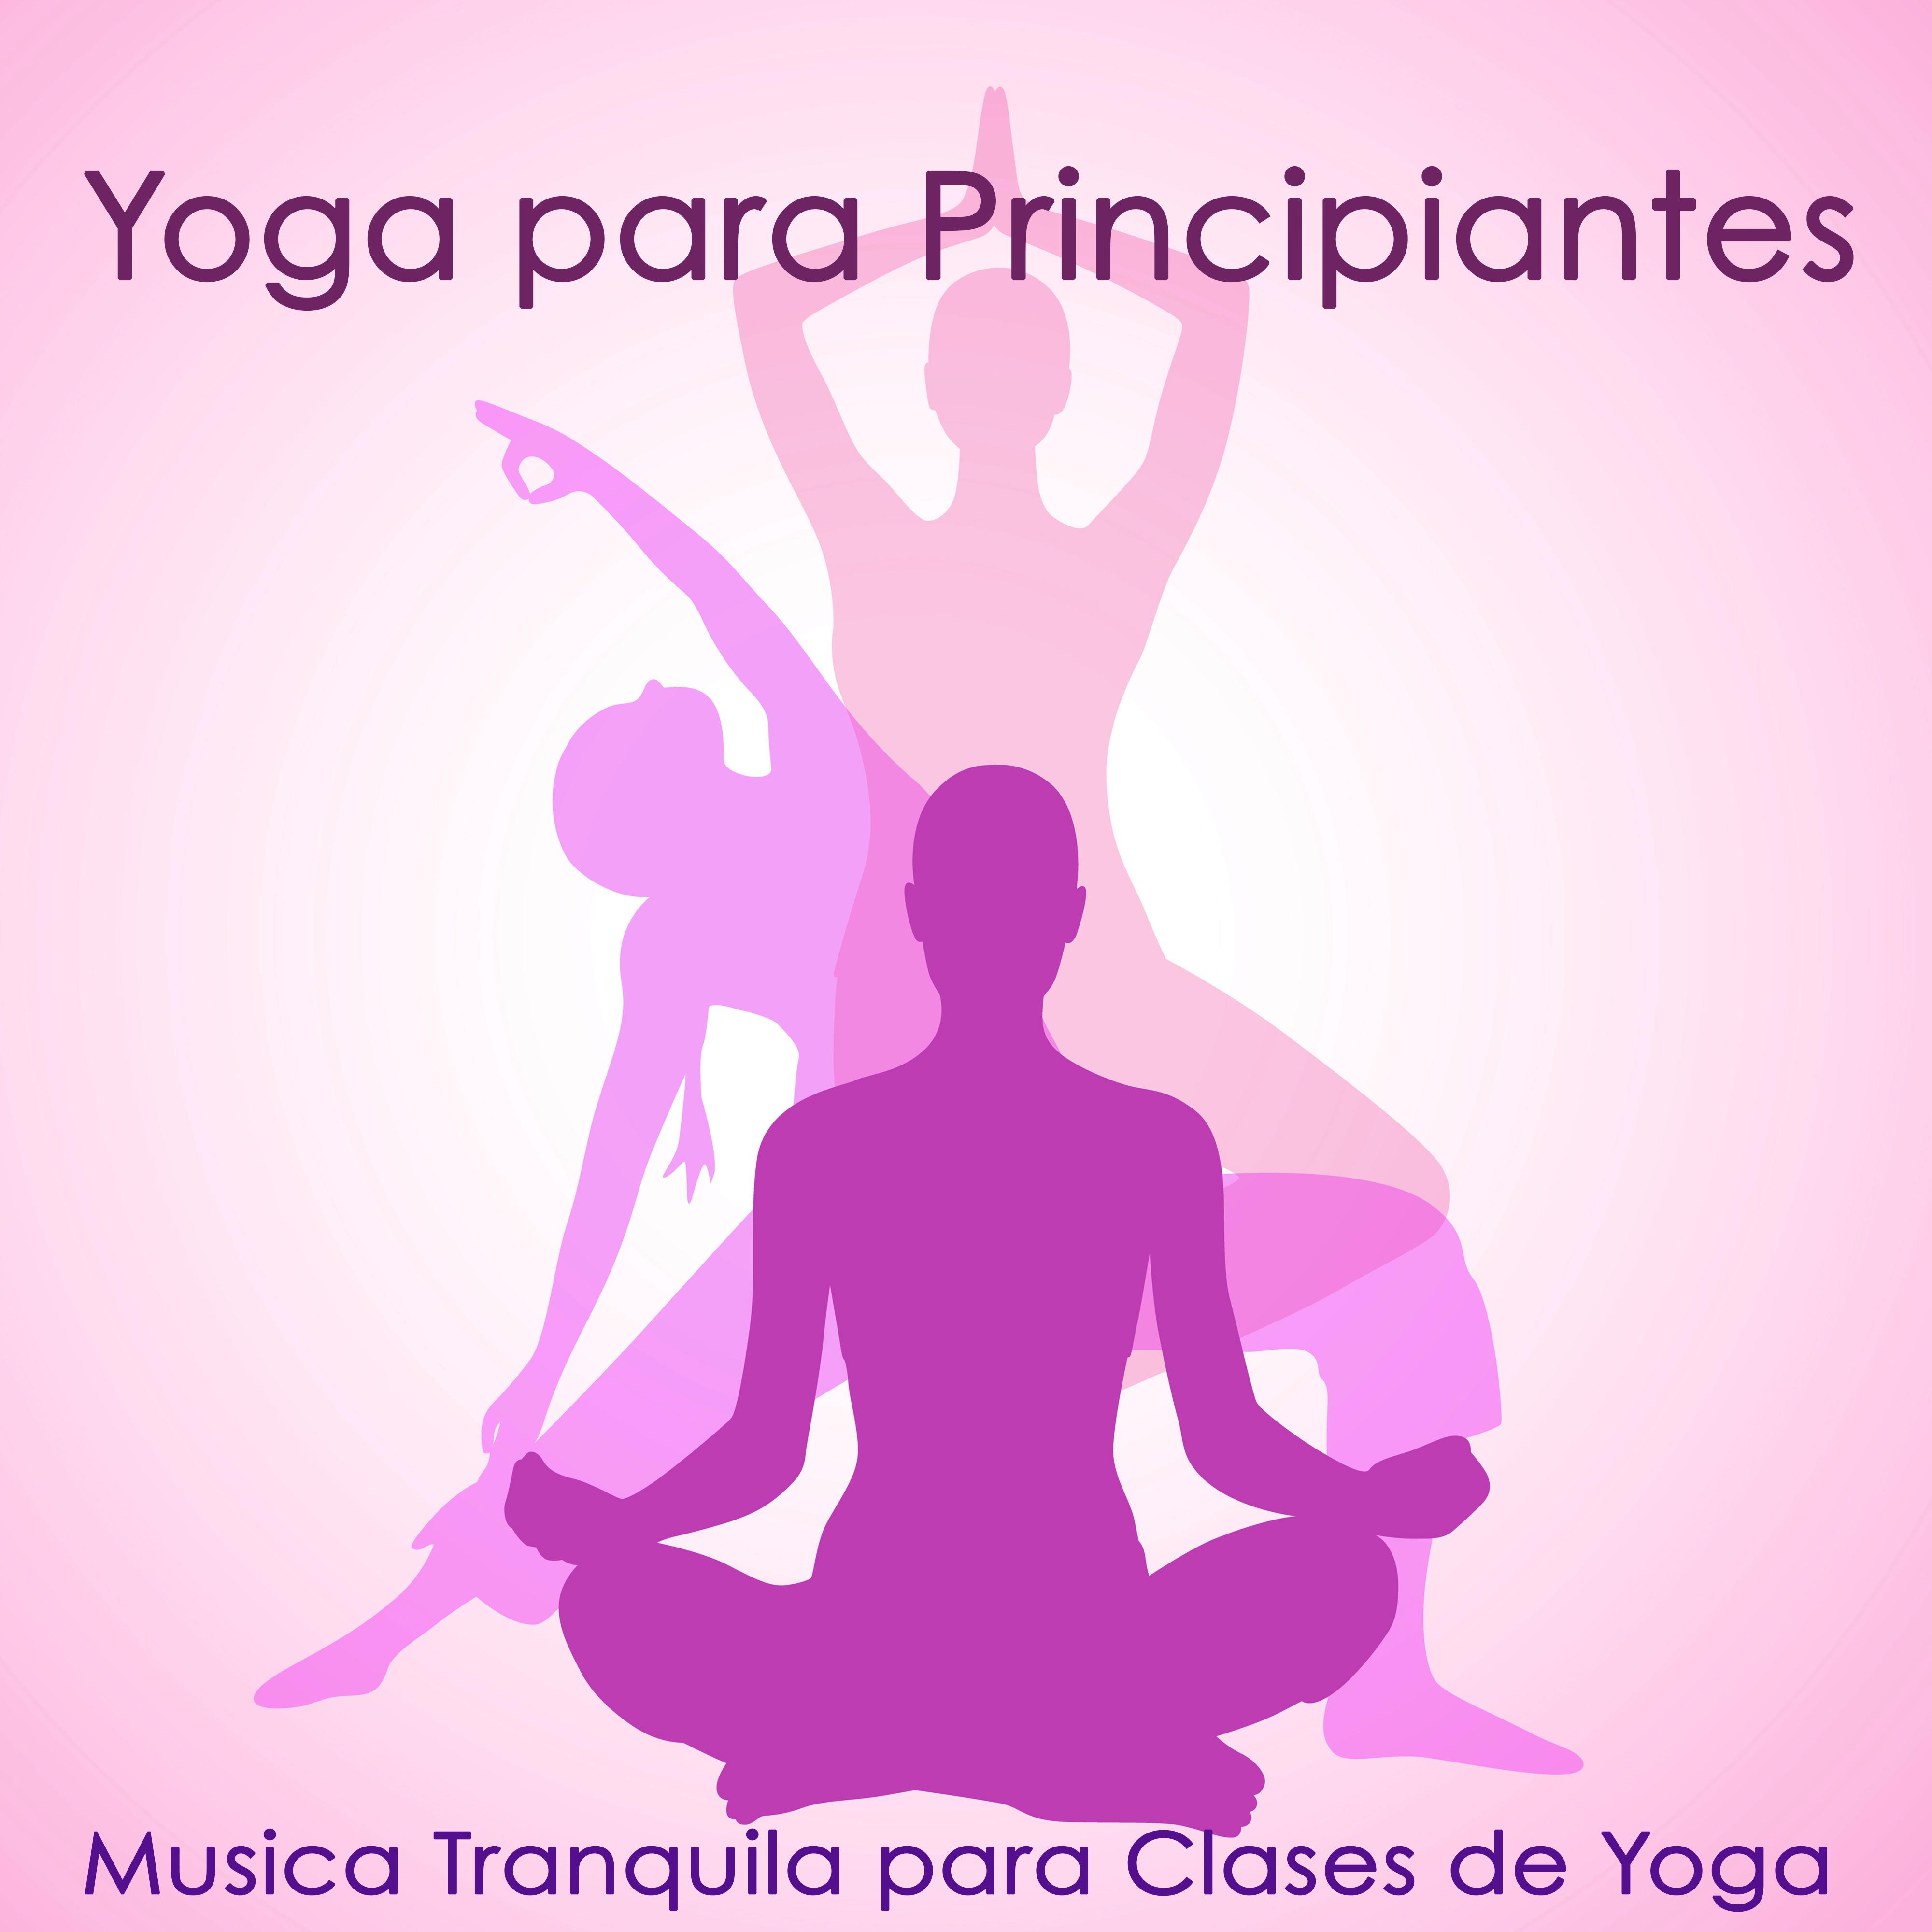 Yoga para Principiantes